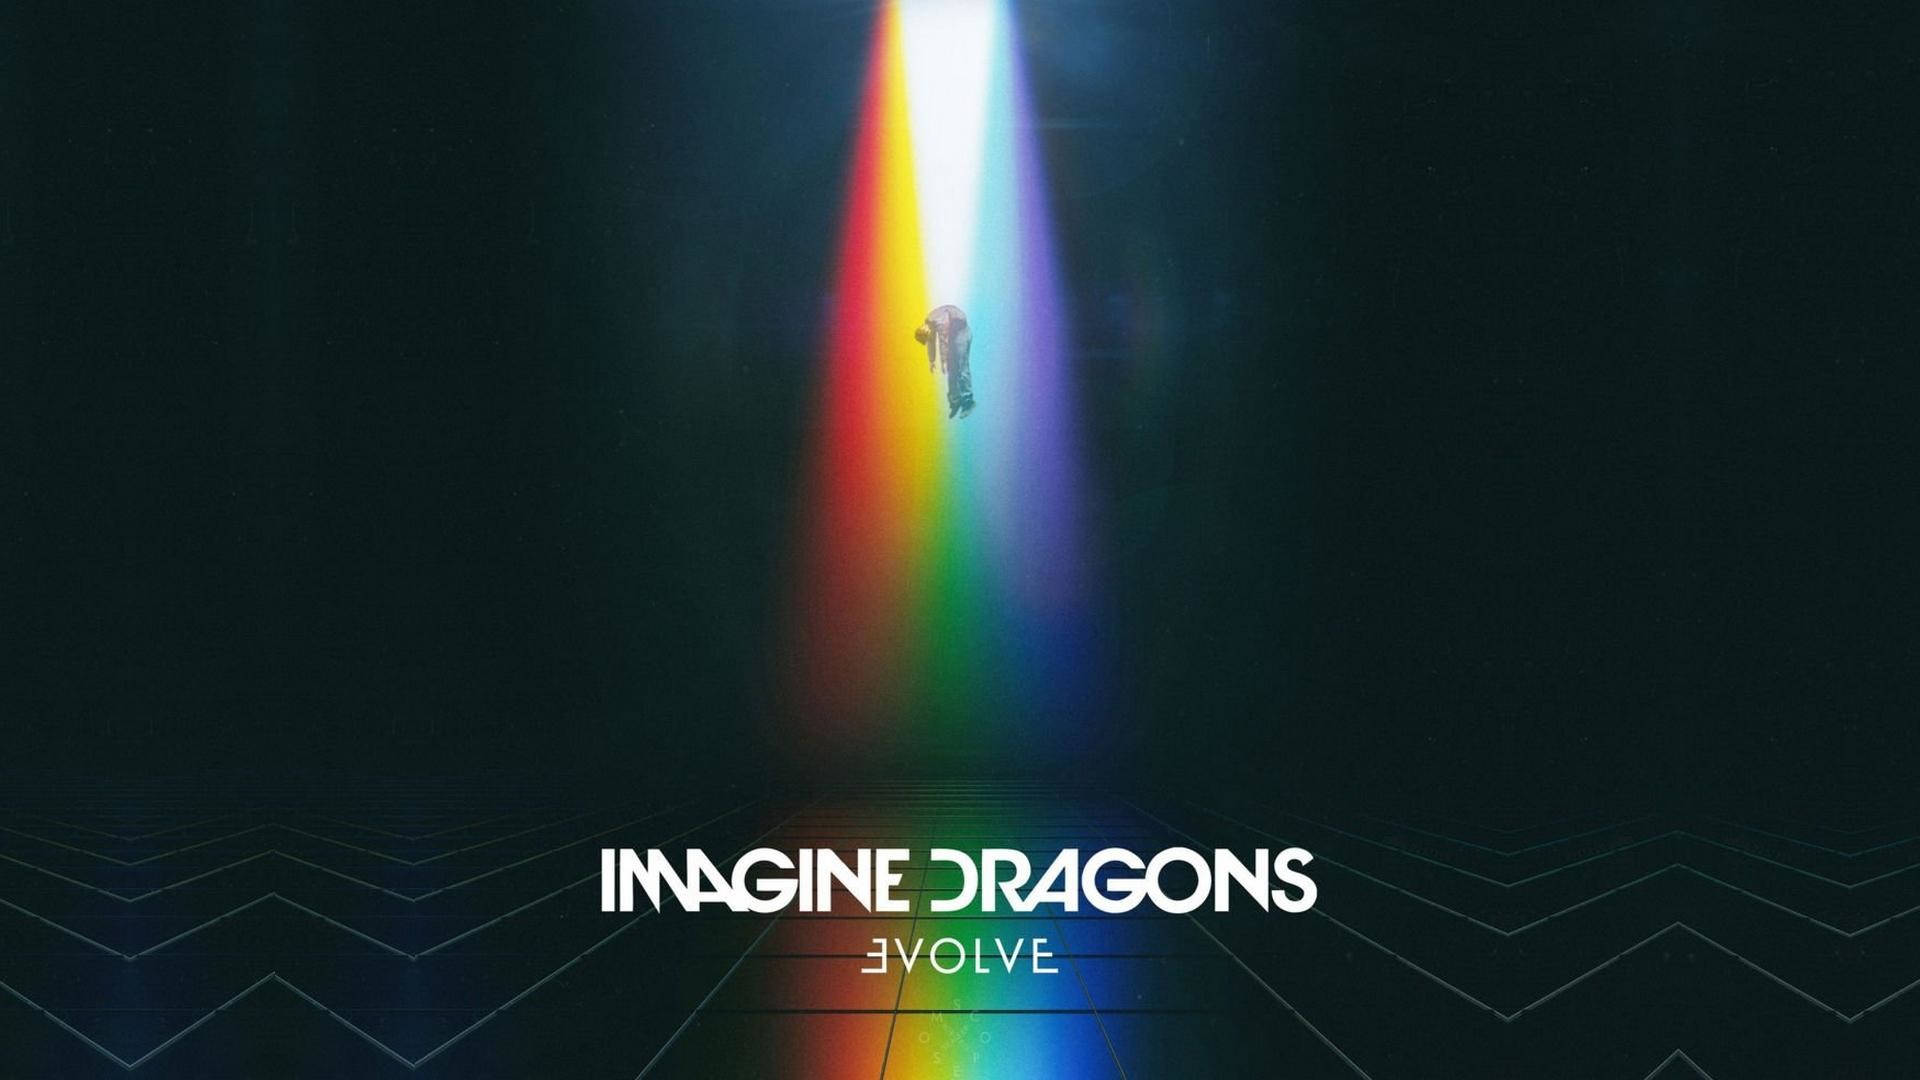 Imagine Dragons Evolve Official Poster Background